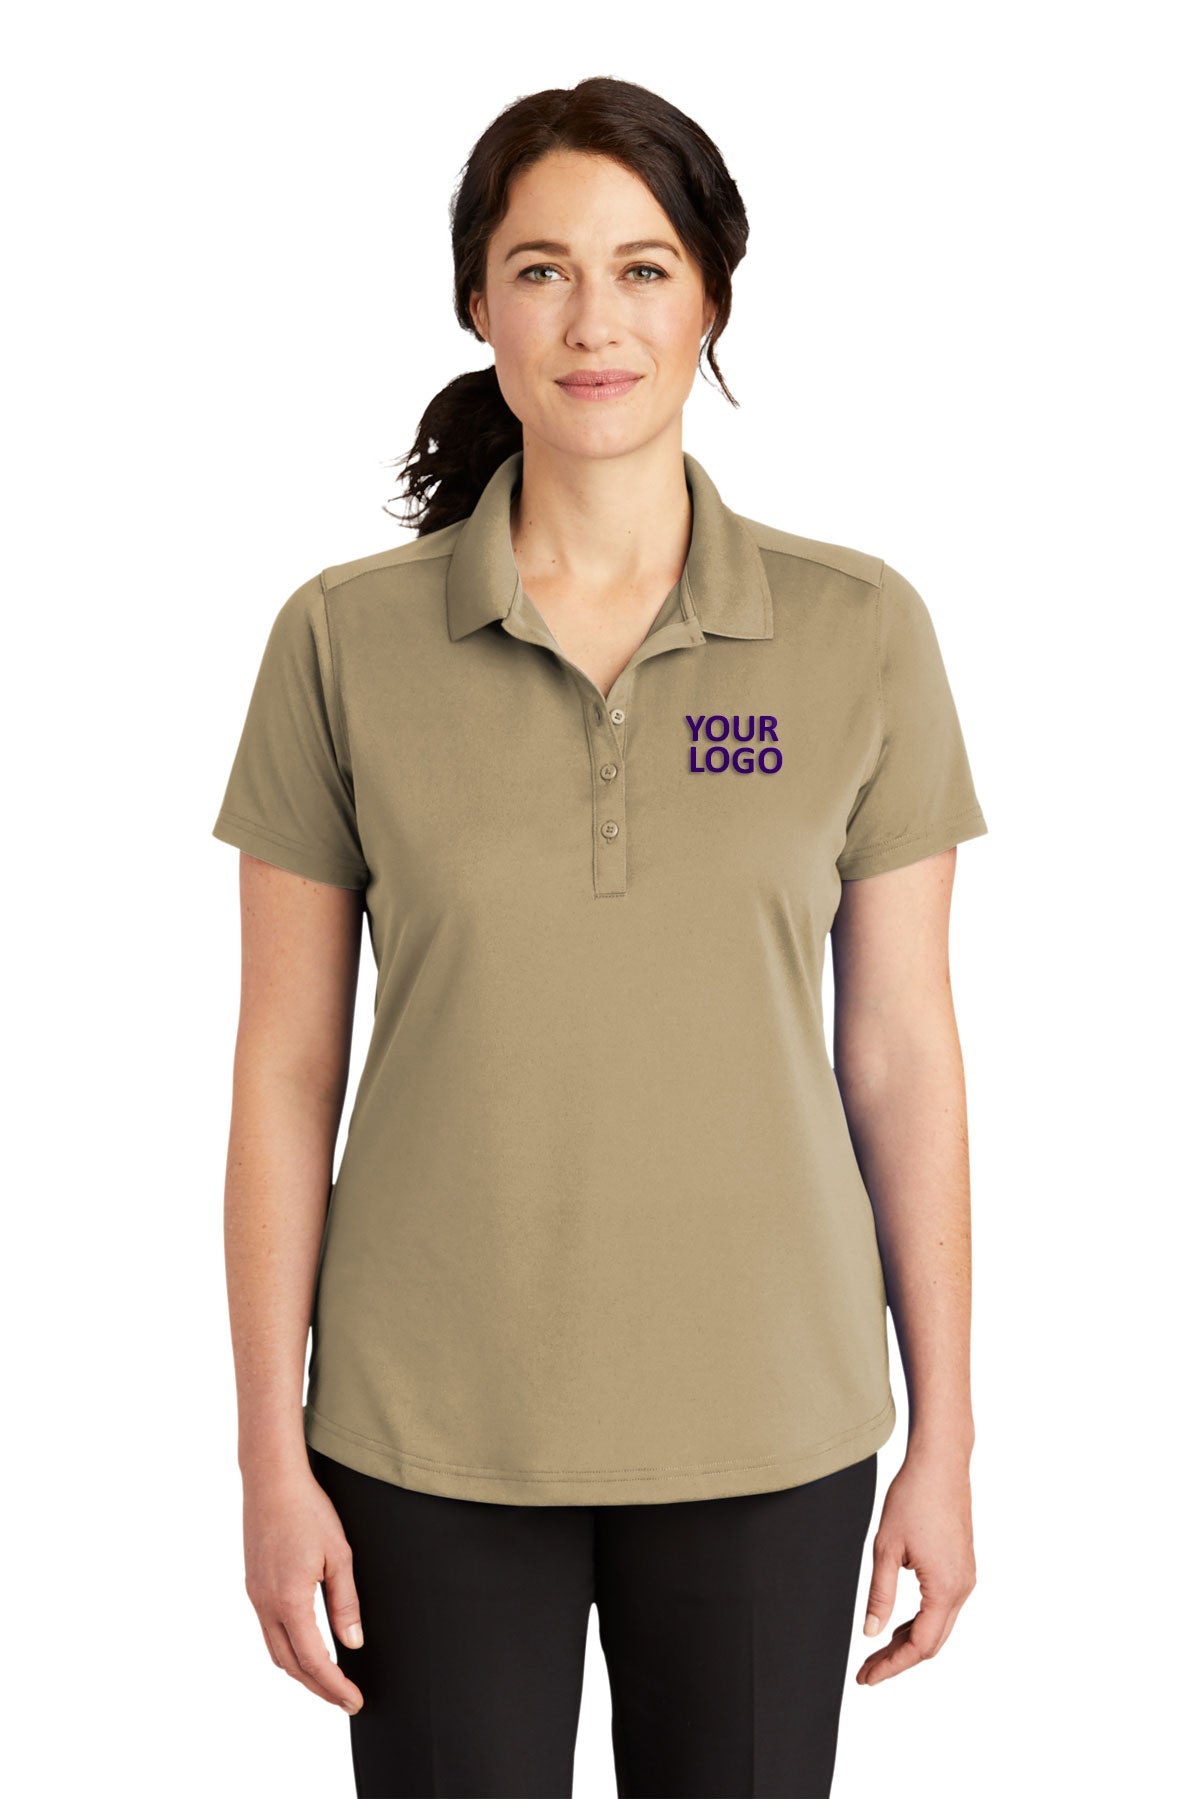 CornerStone Tan CS419 polo shirts with company logo